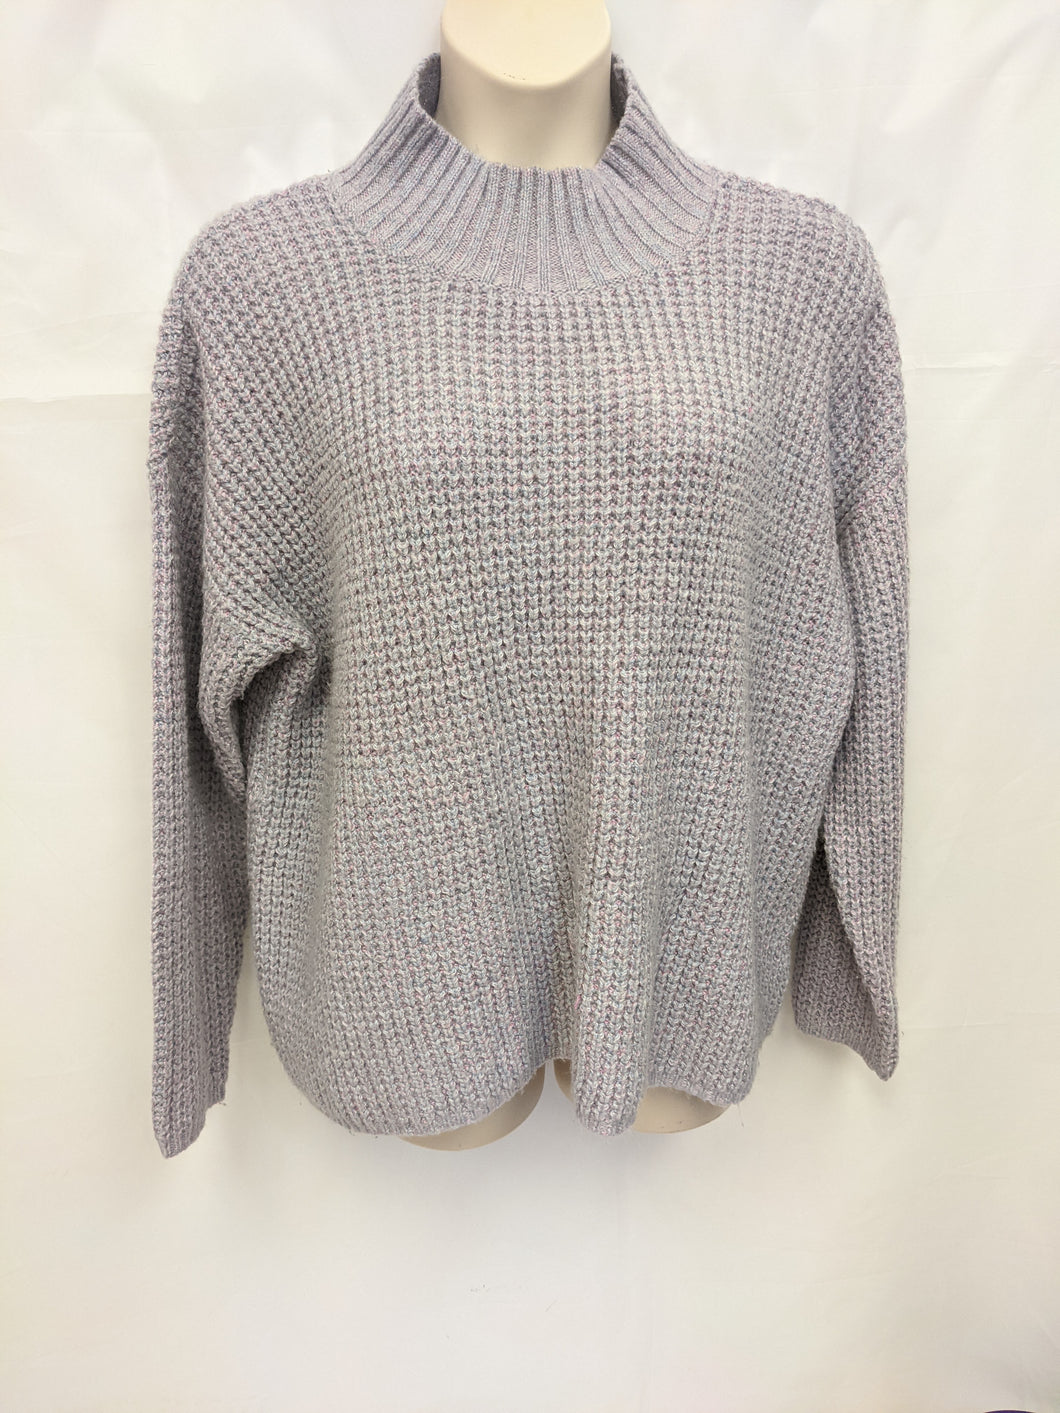 Sweater - Size 1X